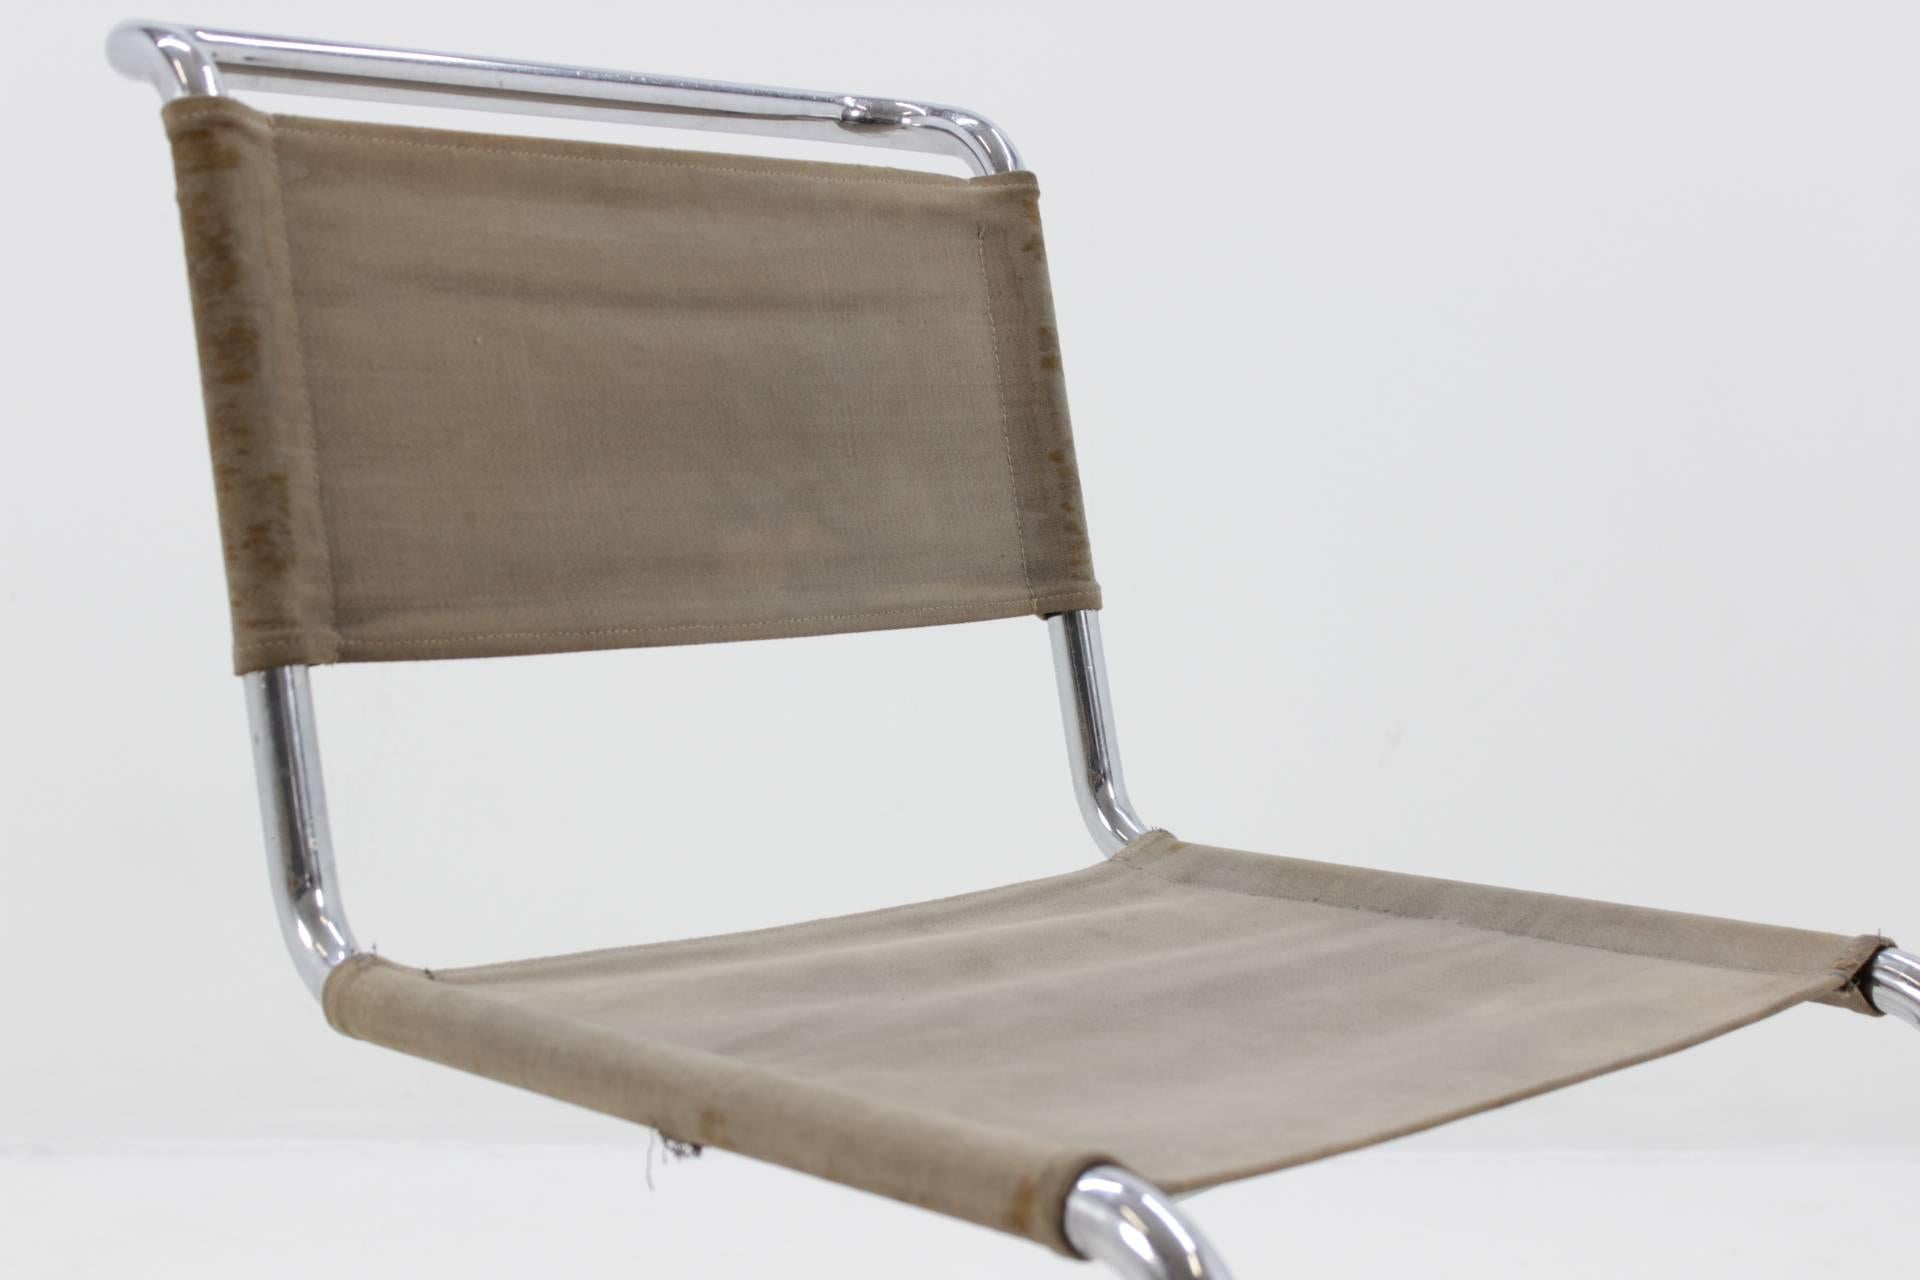 - 1930s, Czechoslovakia
- Designer: J. Halabala
- Variation of Mart Stam chair
- Producer: UP Závody
- Completely original condition
- Eisengarn.